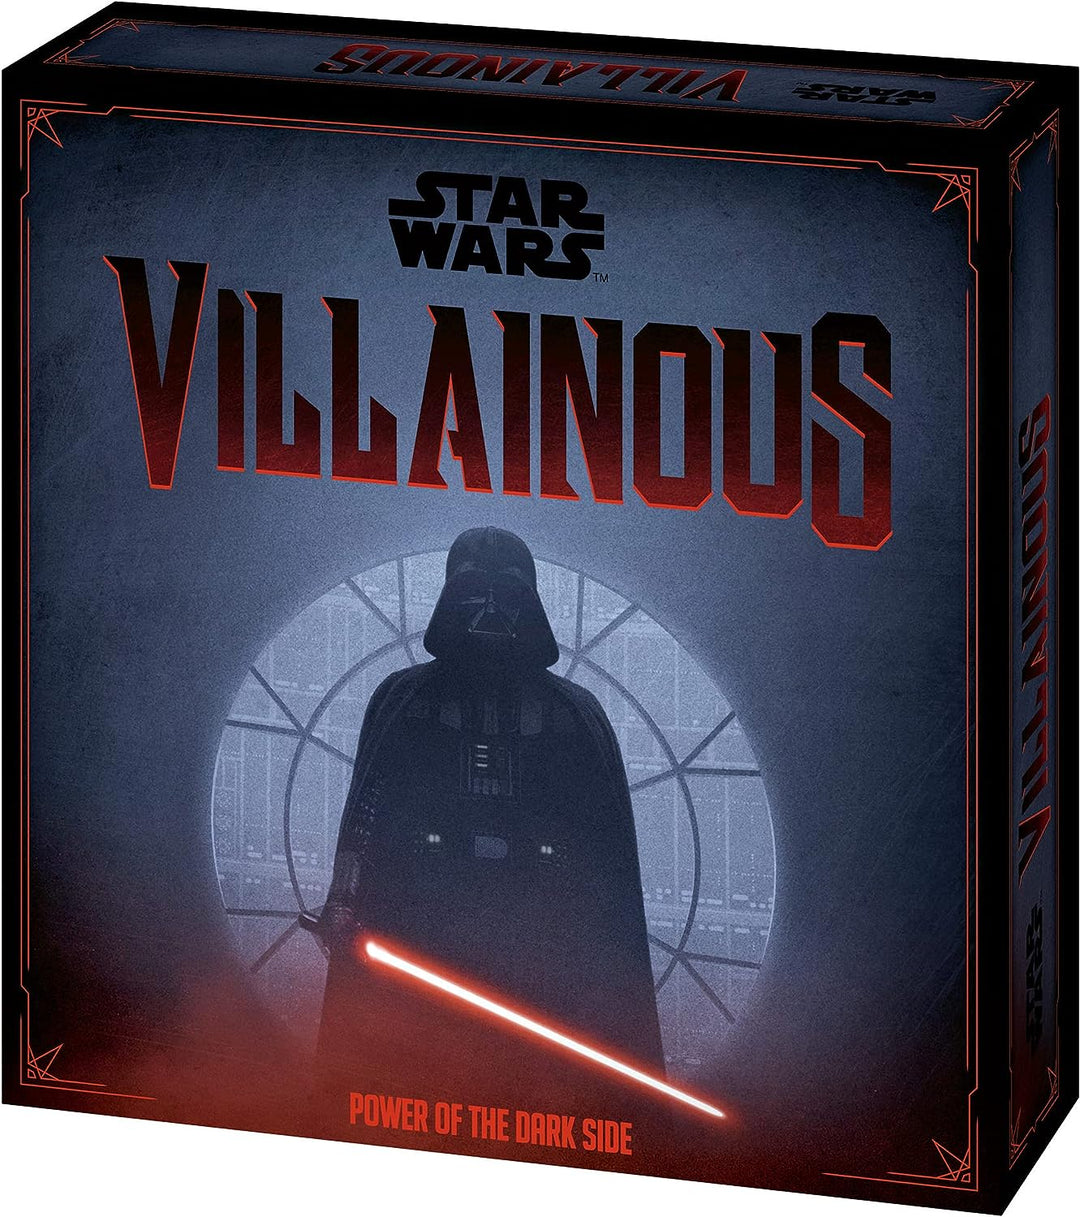 Ravensburger Star Wars Villainous Power of the Dark Side – Darth Vader – Expanda